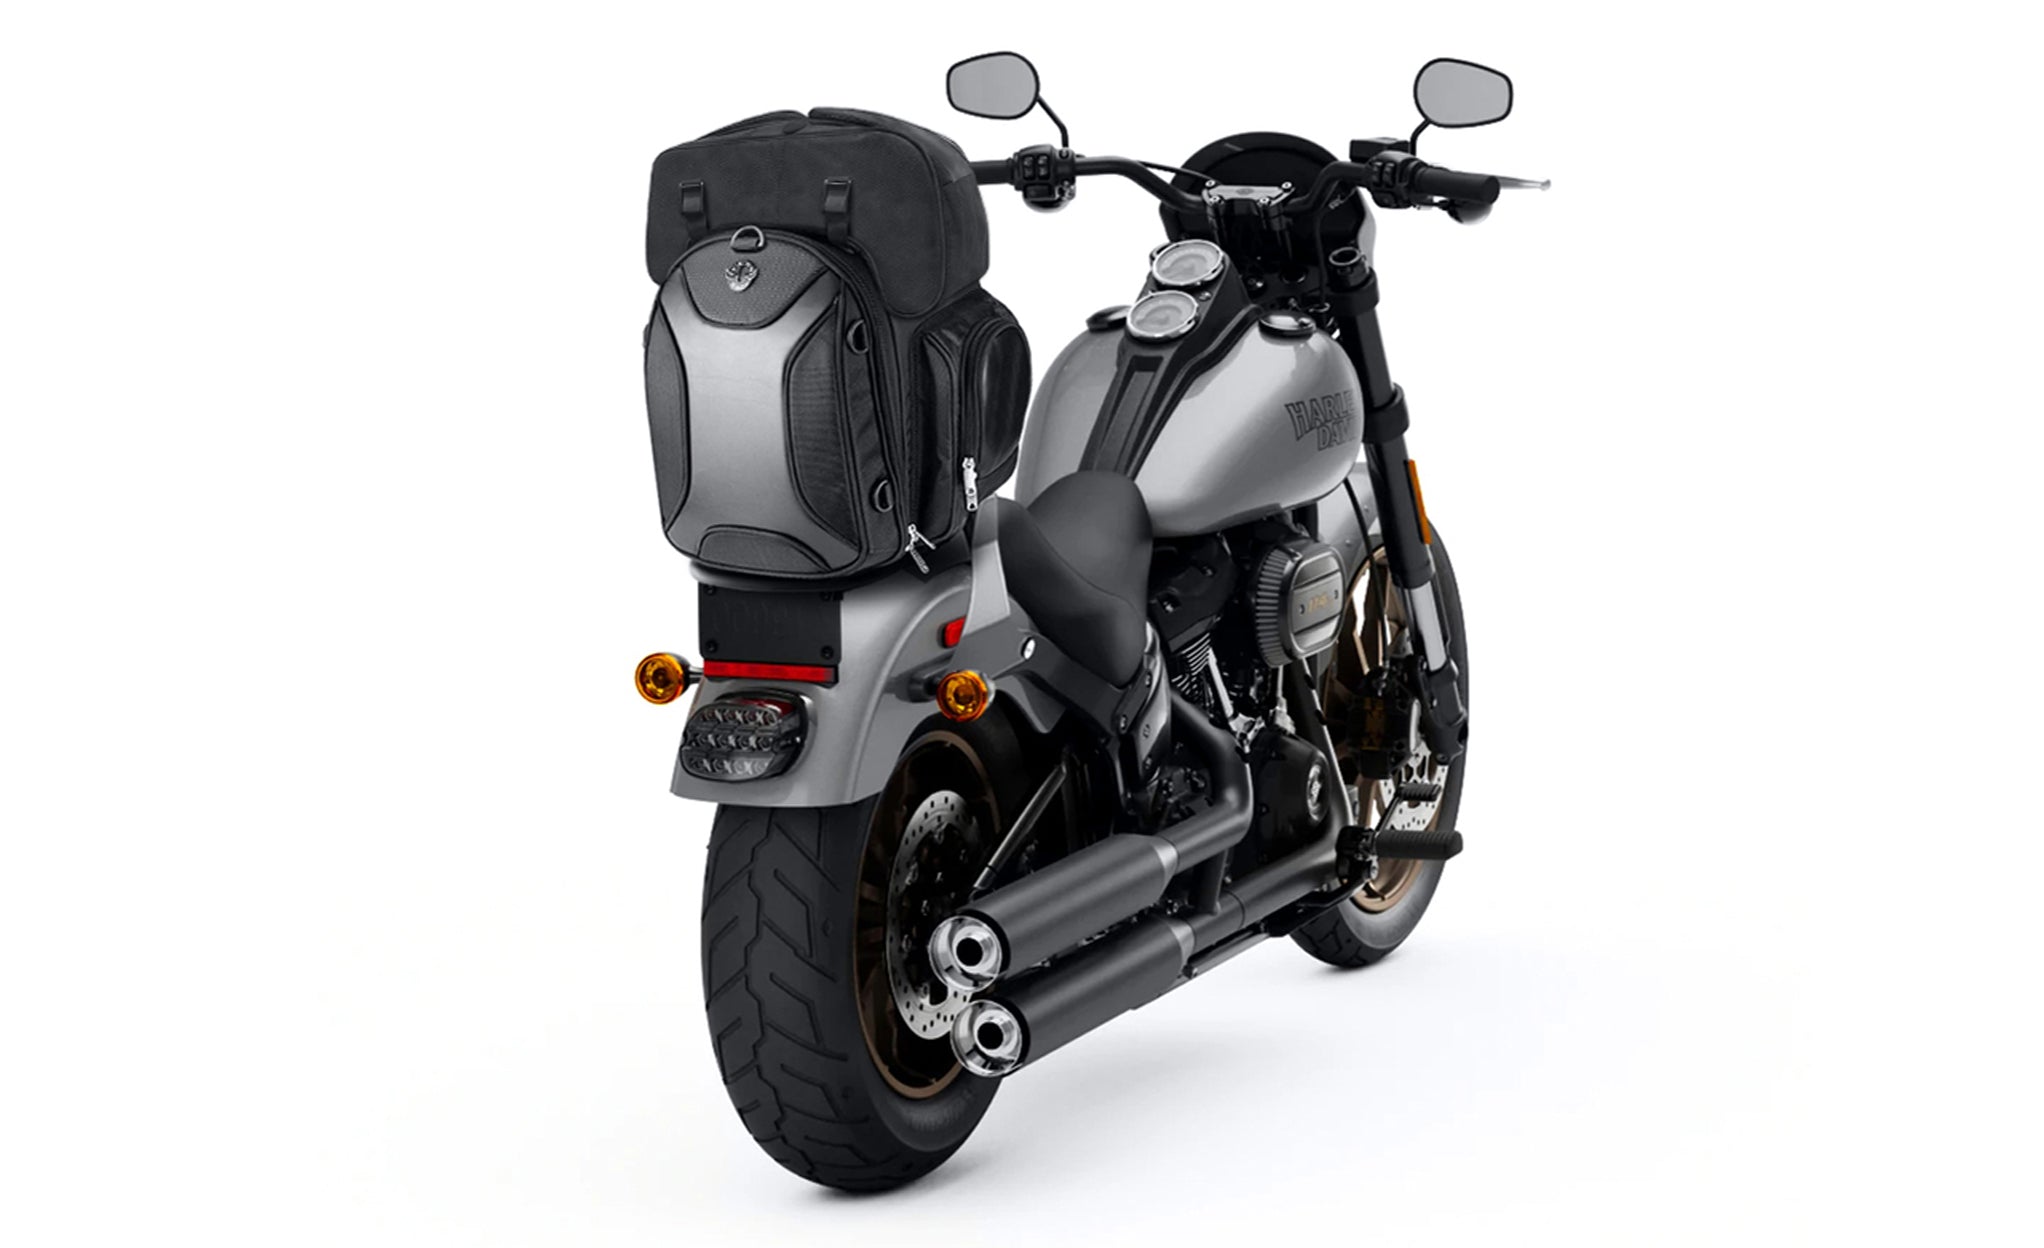 Viking Dagr Extra Large Yamaha Motorcycle Sissy Bar Bag Bag on Bike View @expand